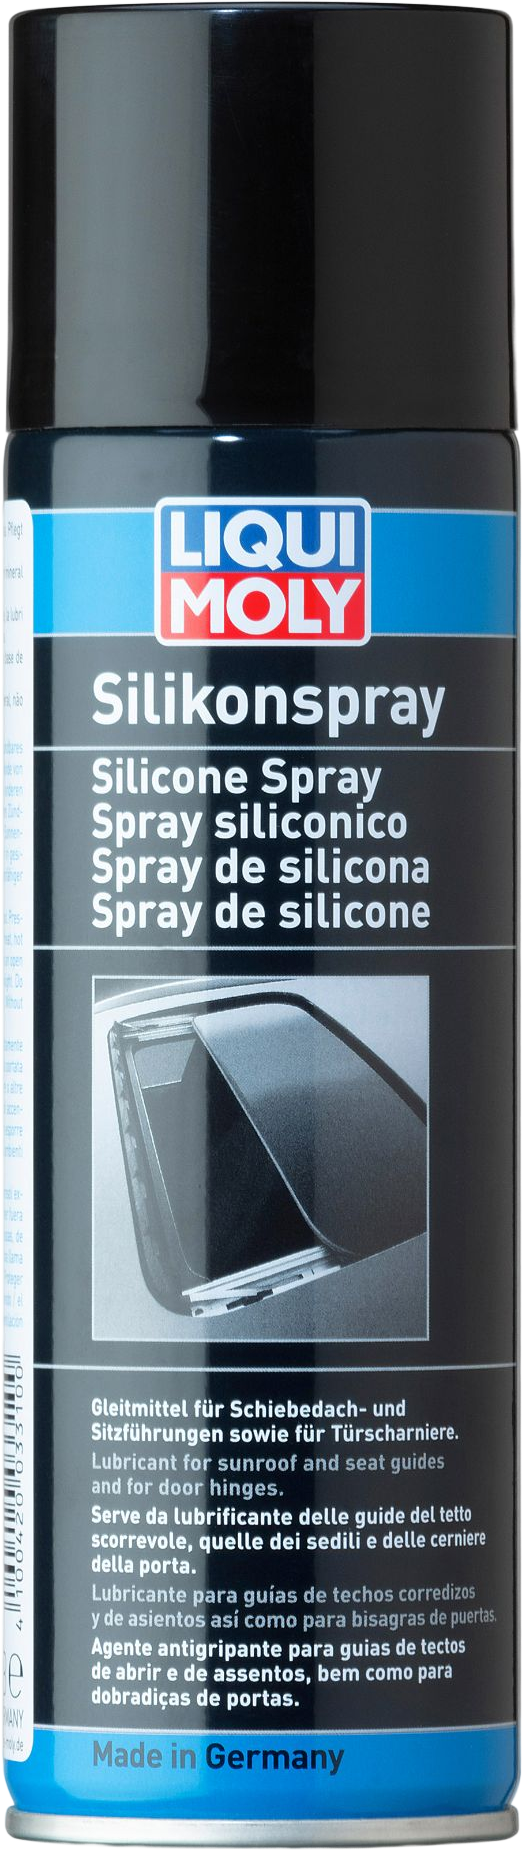 Liqui Moly Siliconenspray, 12 x 300 ml detail 2